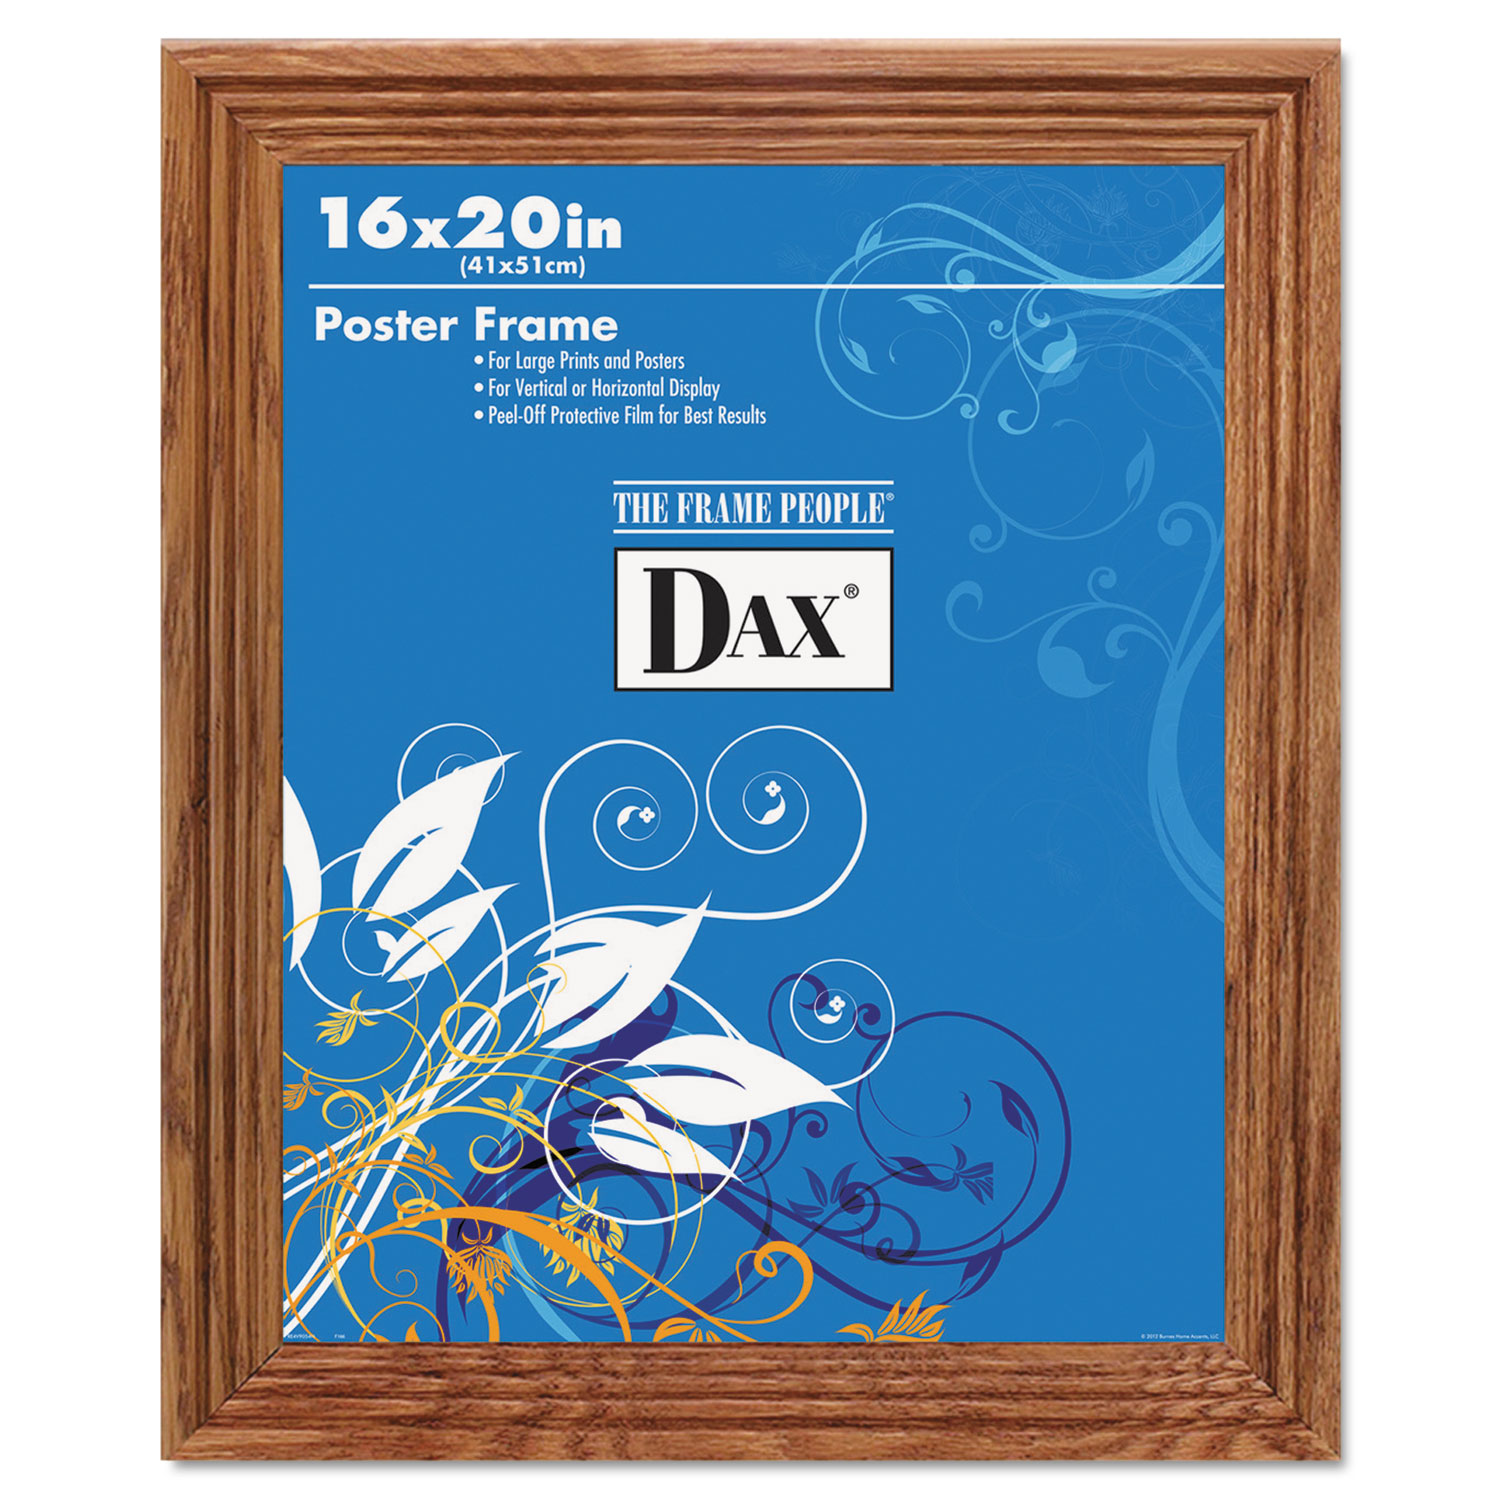 DAX Plastic Poster Frame, Traditional Clear Plastic Window, 16 x 20, Medium Oak